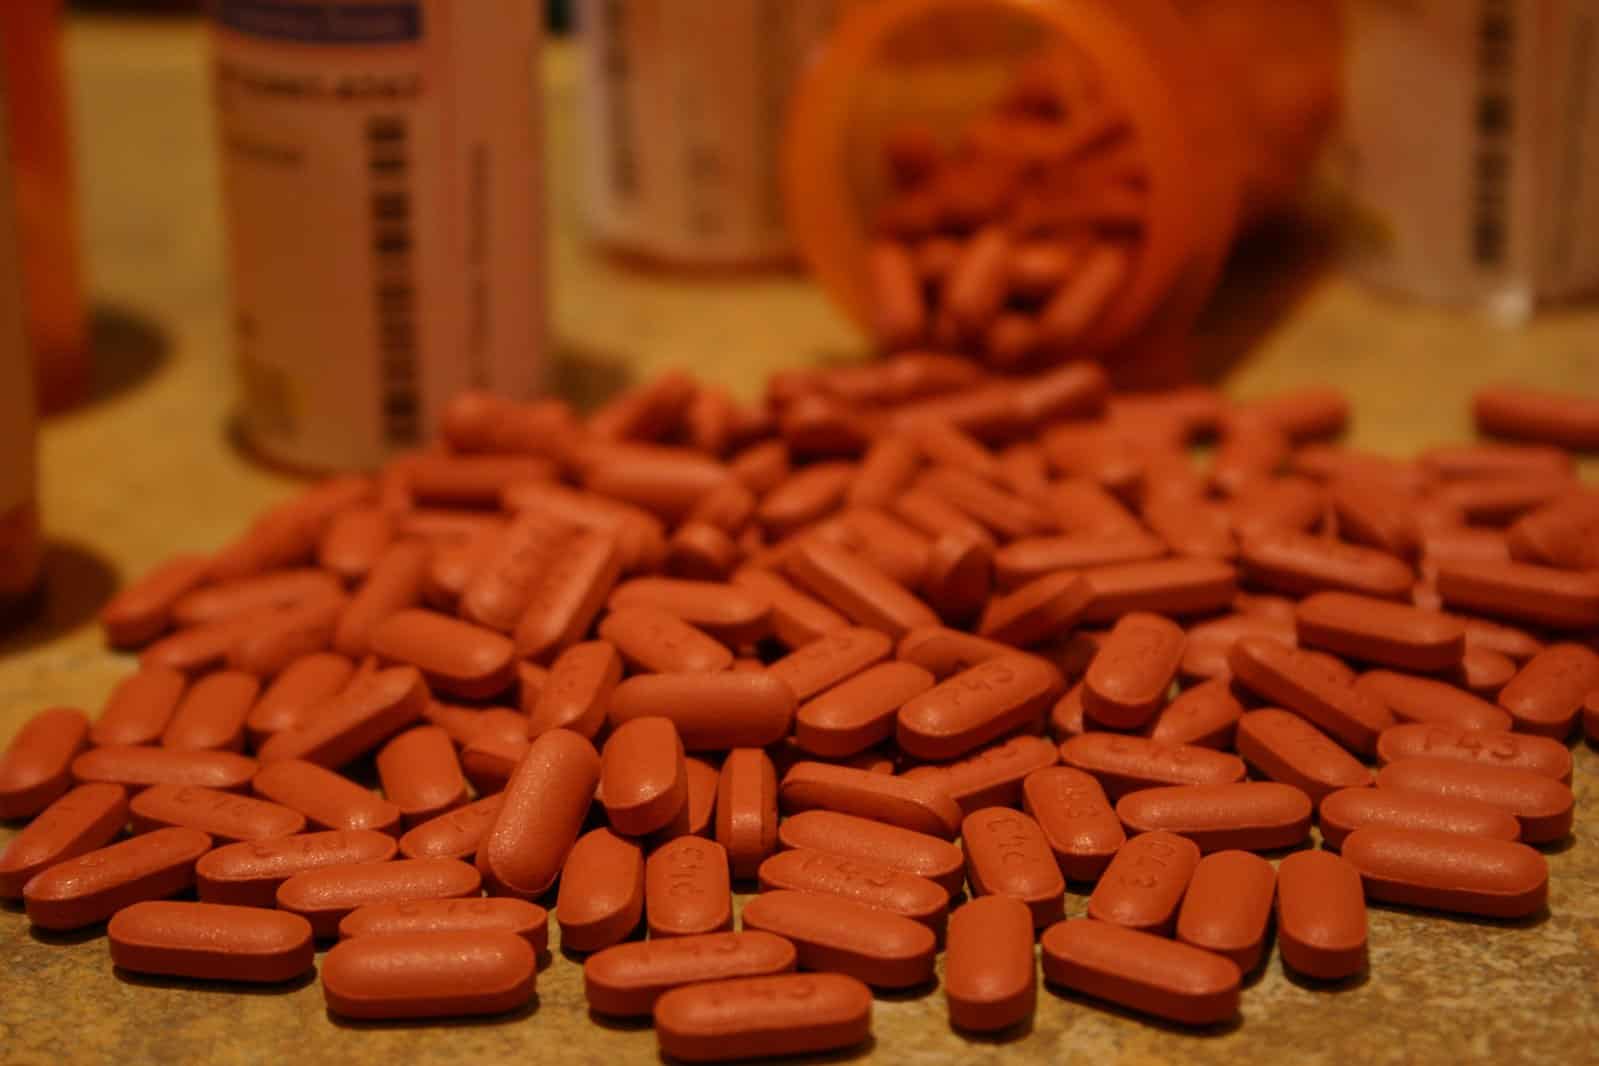 valsartan medication spread out across a table